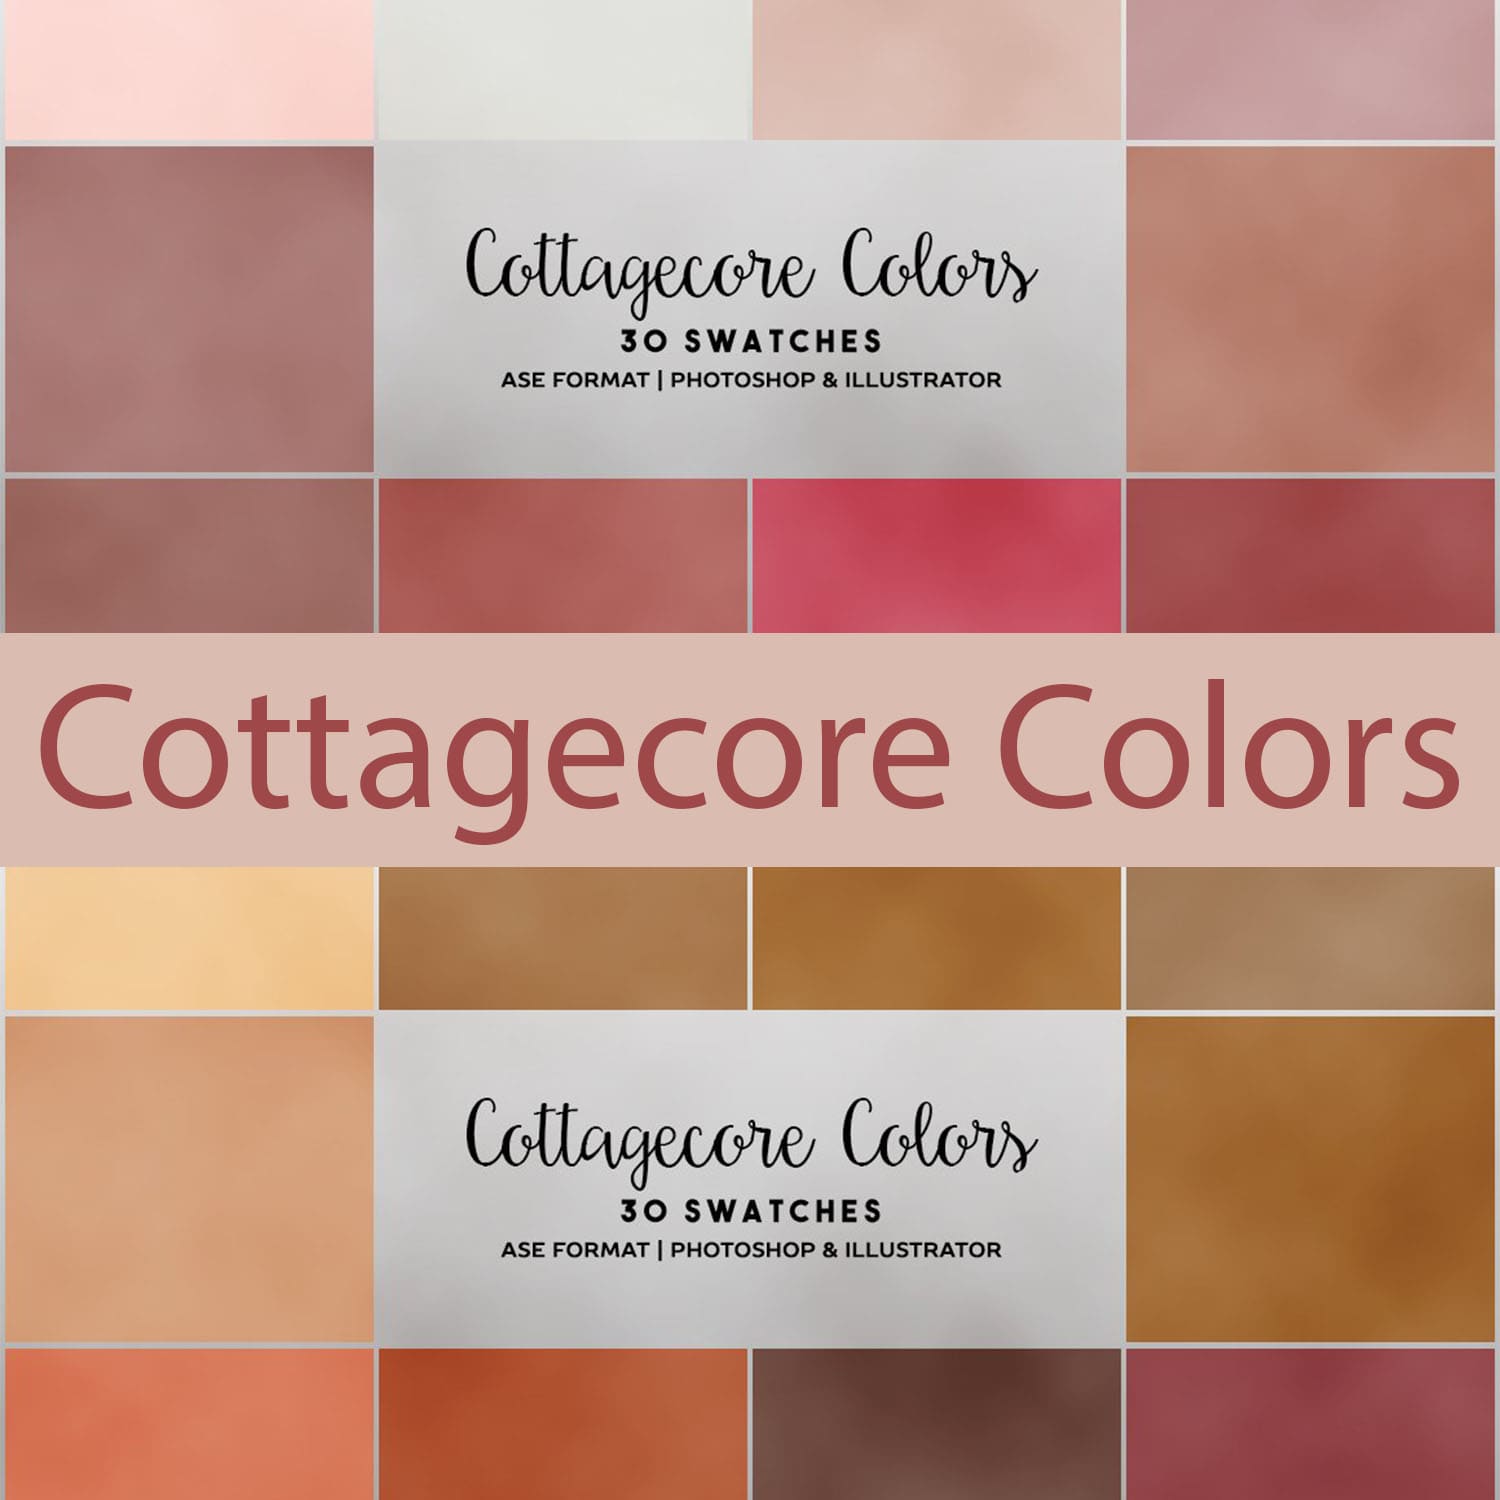 Cottagecore Colors Cover Image.